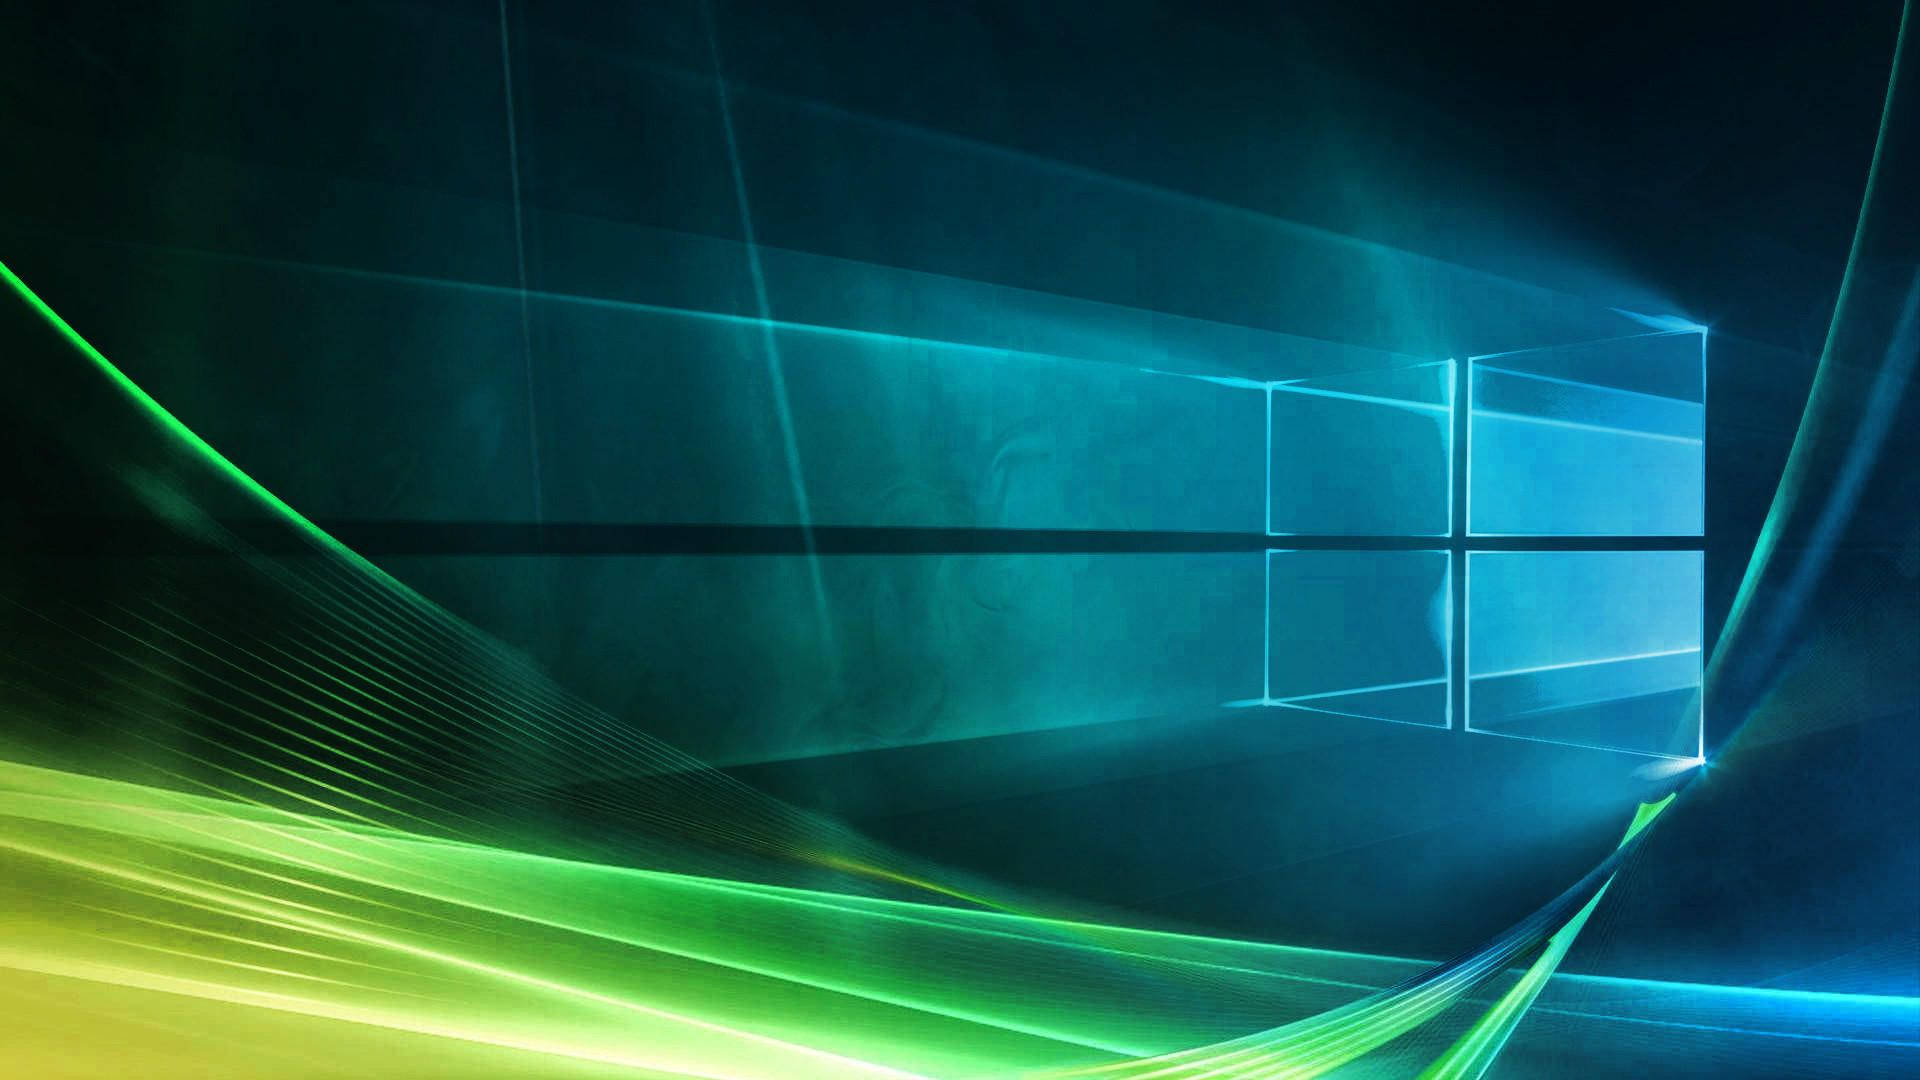 Windows Vista 1920X1080 Wallpaper and Background Image